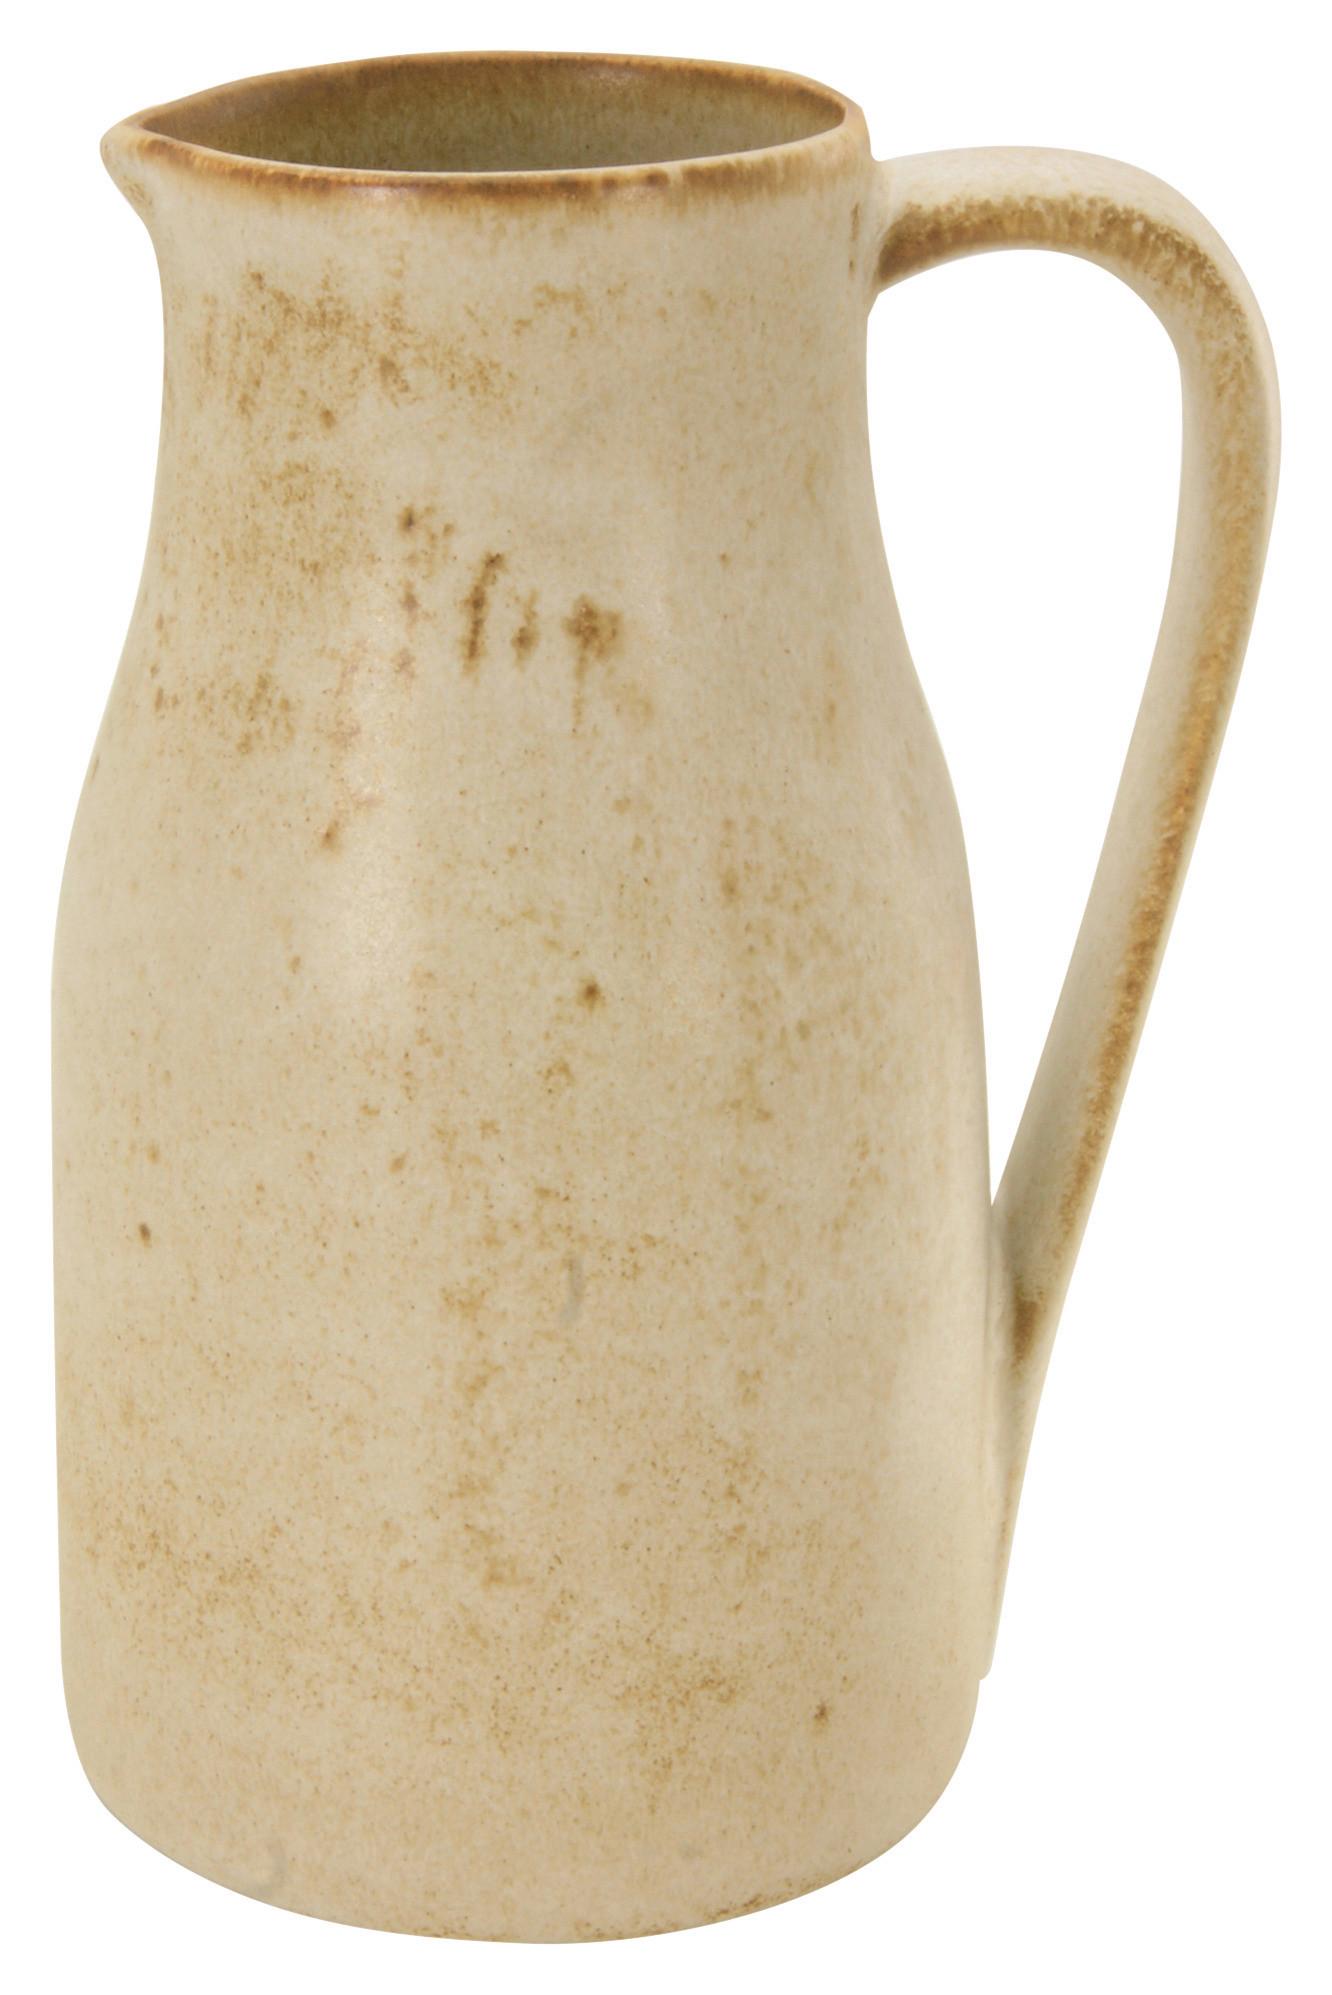 Krug Sahara aus Keramik ca. 1,3l - Weiß, LIFESTYLE, Keramik (16/12/22cm) - Zandiara